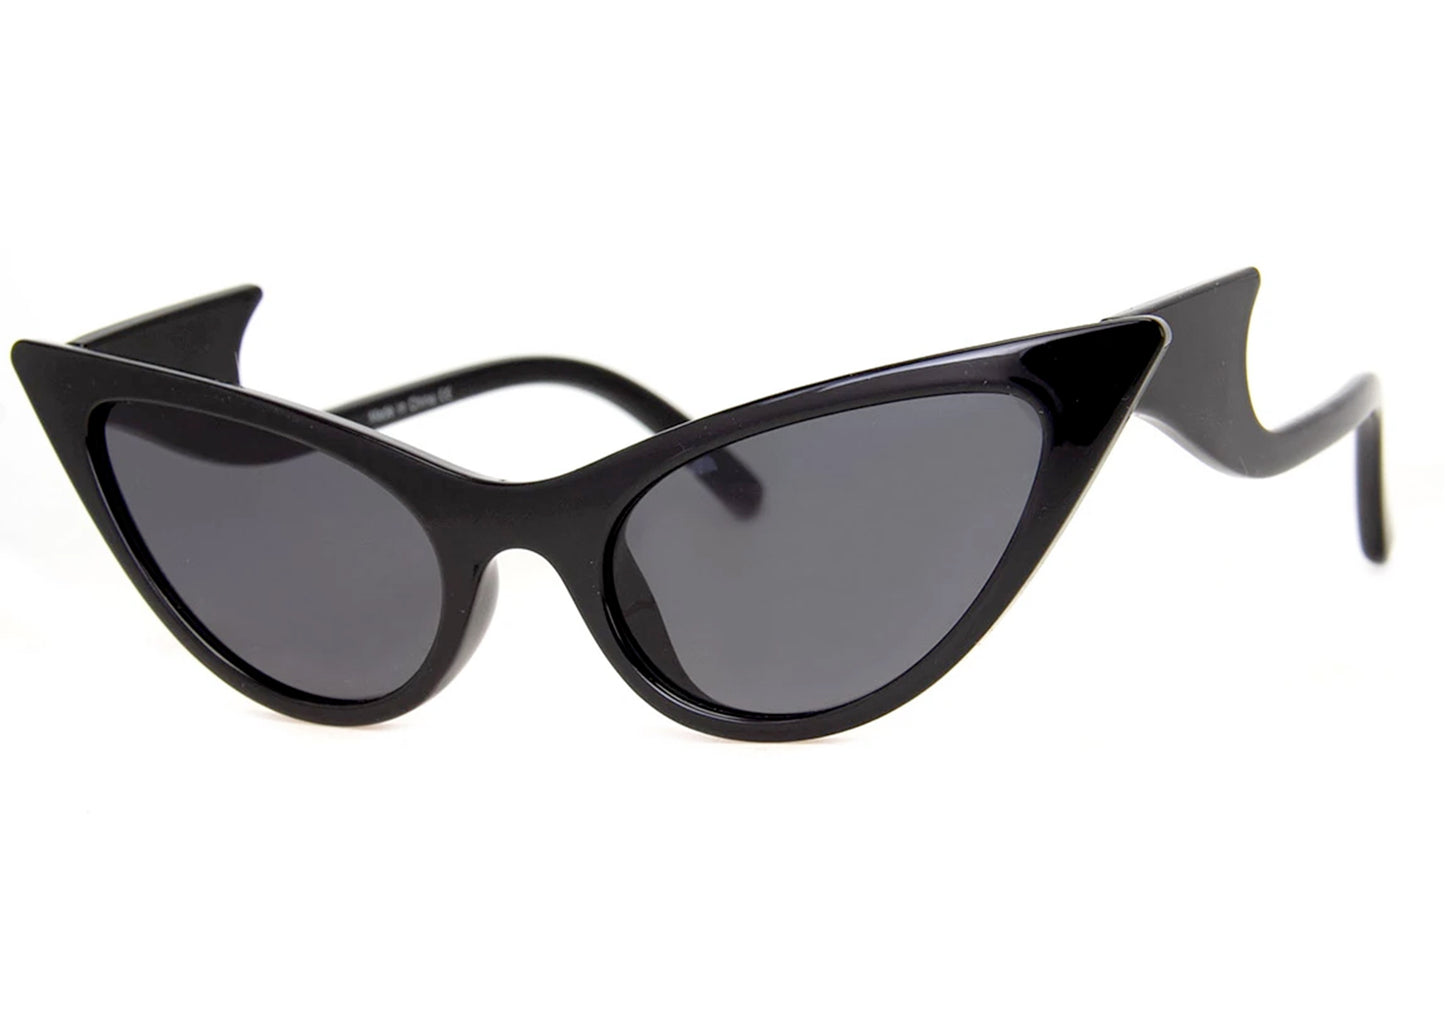 Sugar Pie Sunglasses in Black